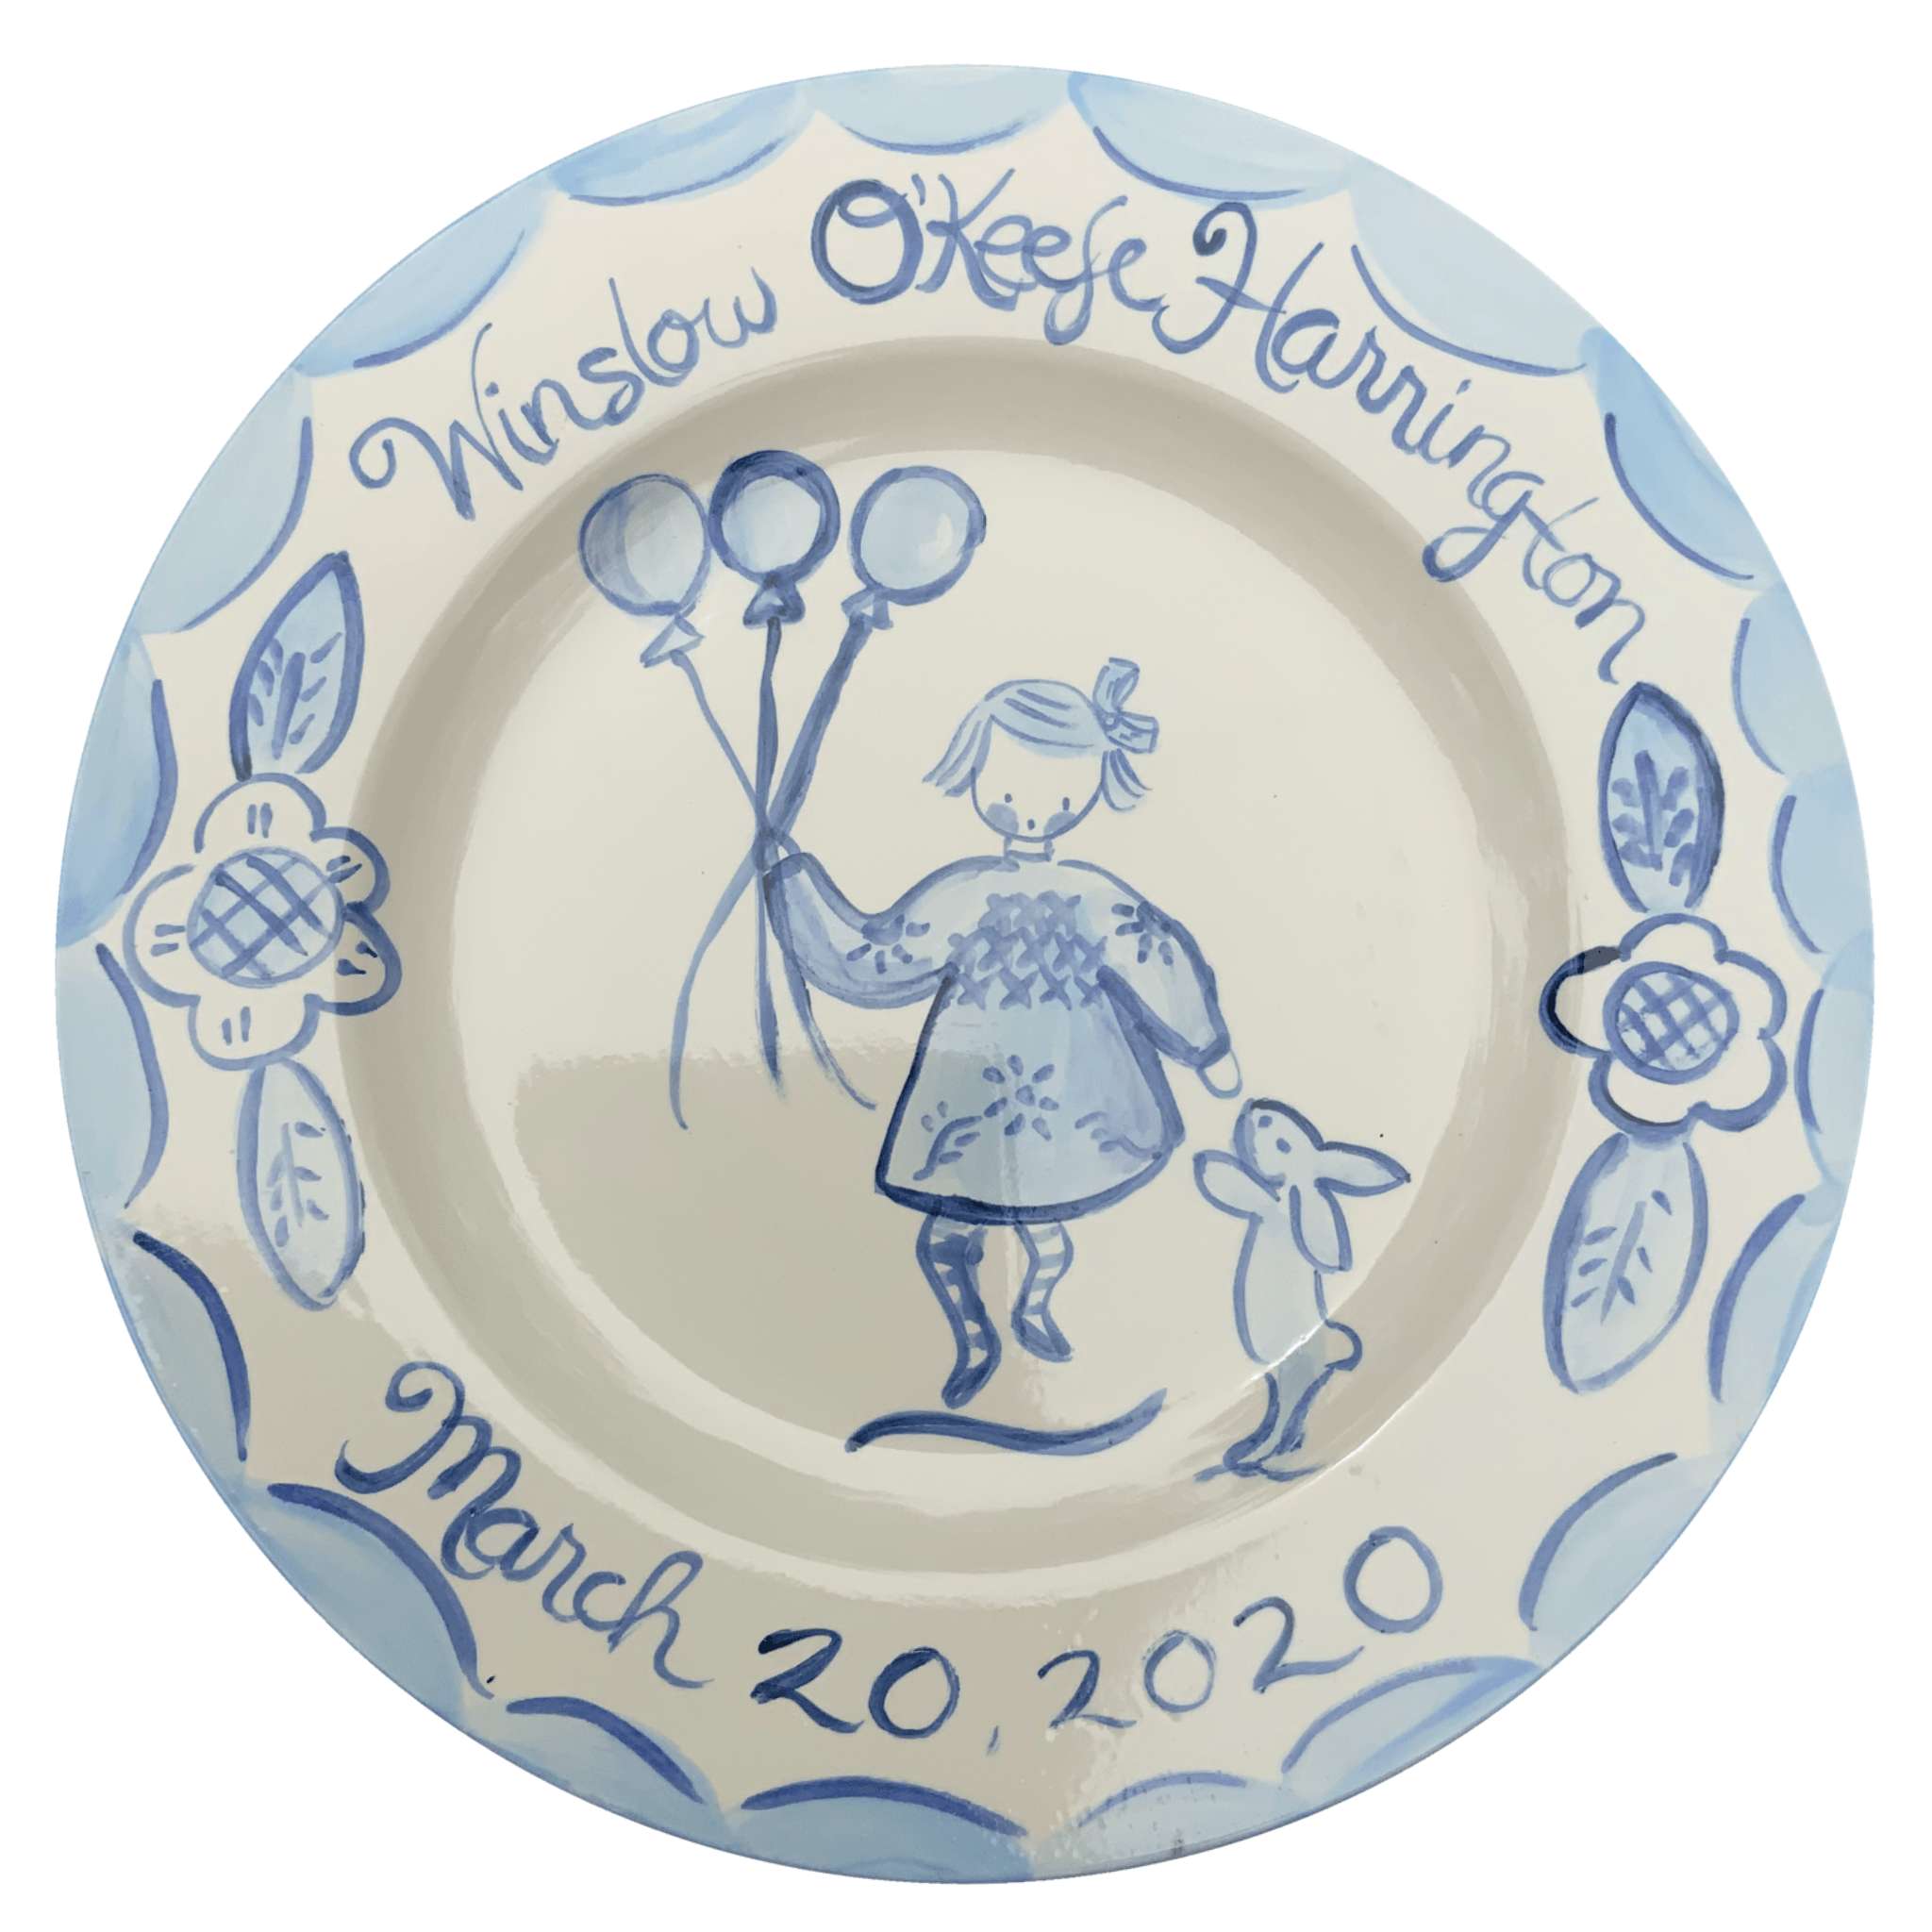 Stylish Ceramic Birthday Plate